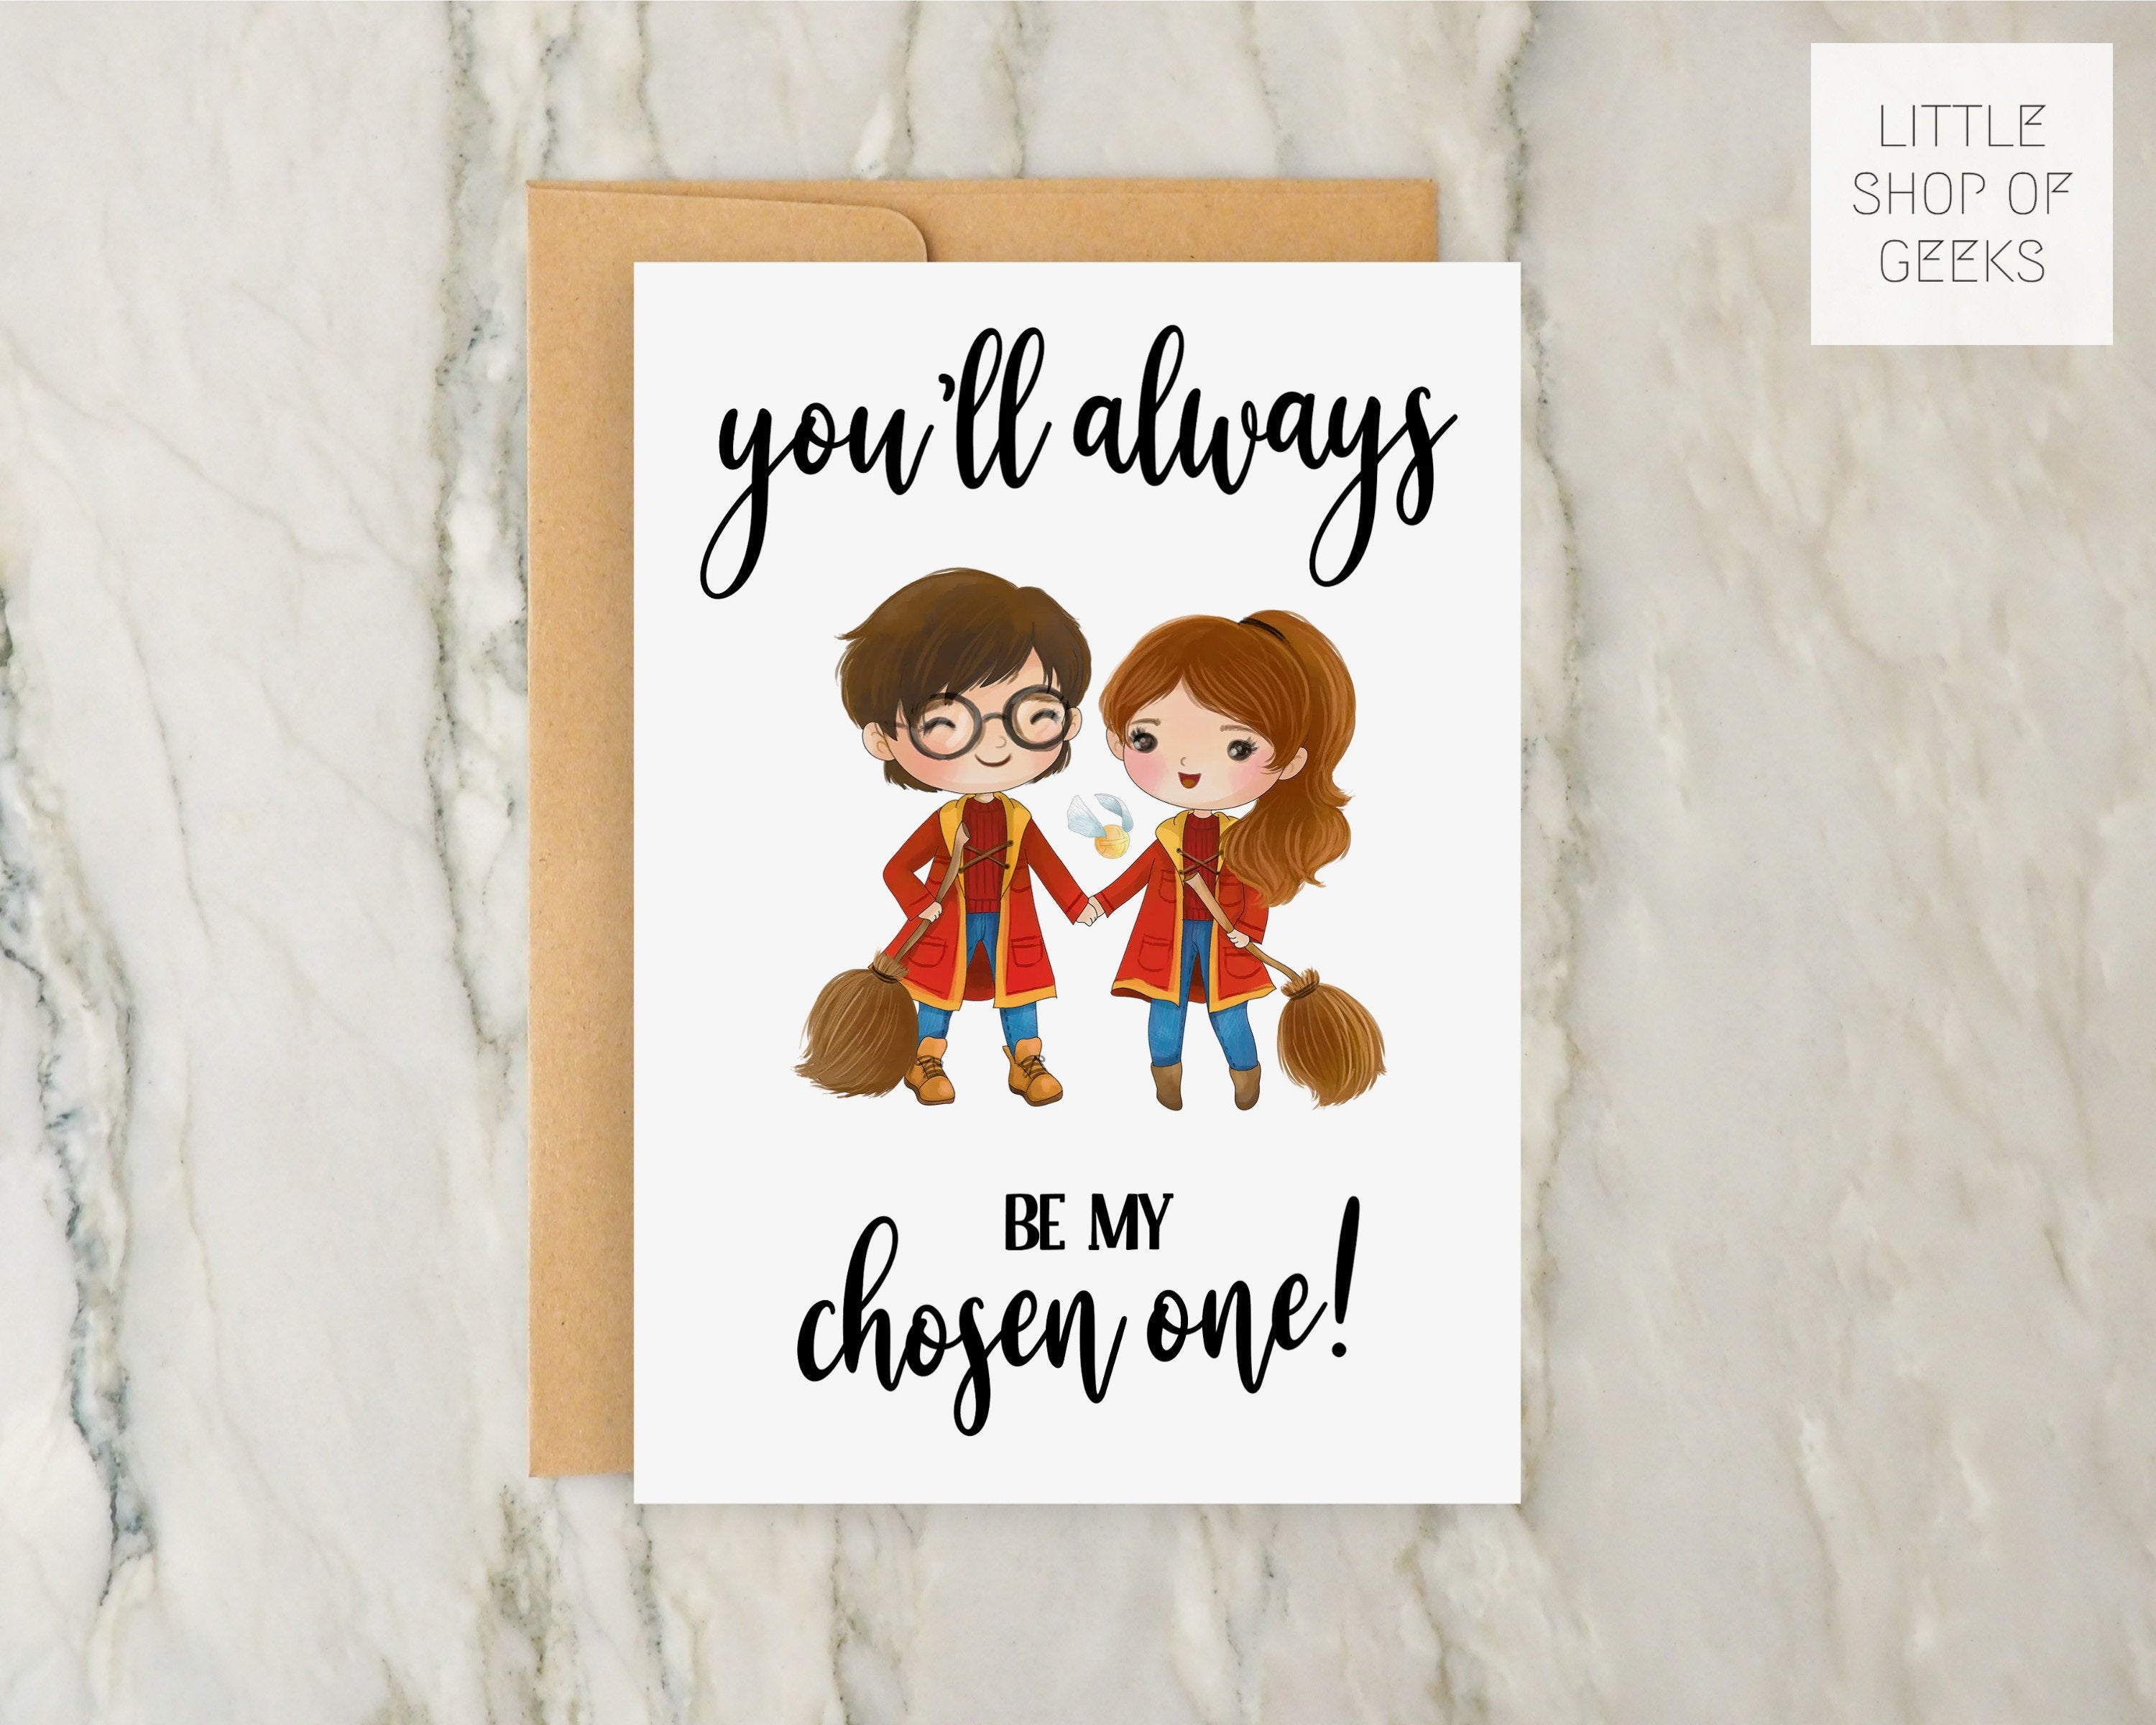 Wizard Love Card - Seeker Catch - Geeky Nerdy Geek Nerd Greeting Card Valentine Valentine&#39;s V-Day - Adorable Cute Illustration